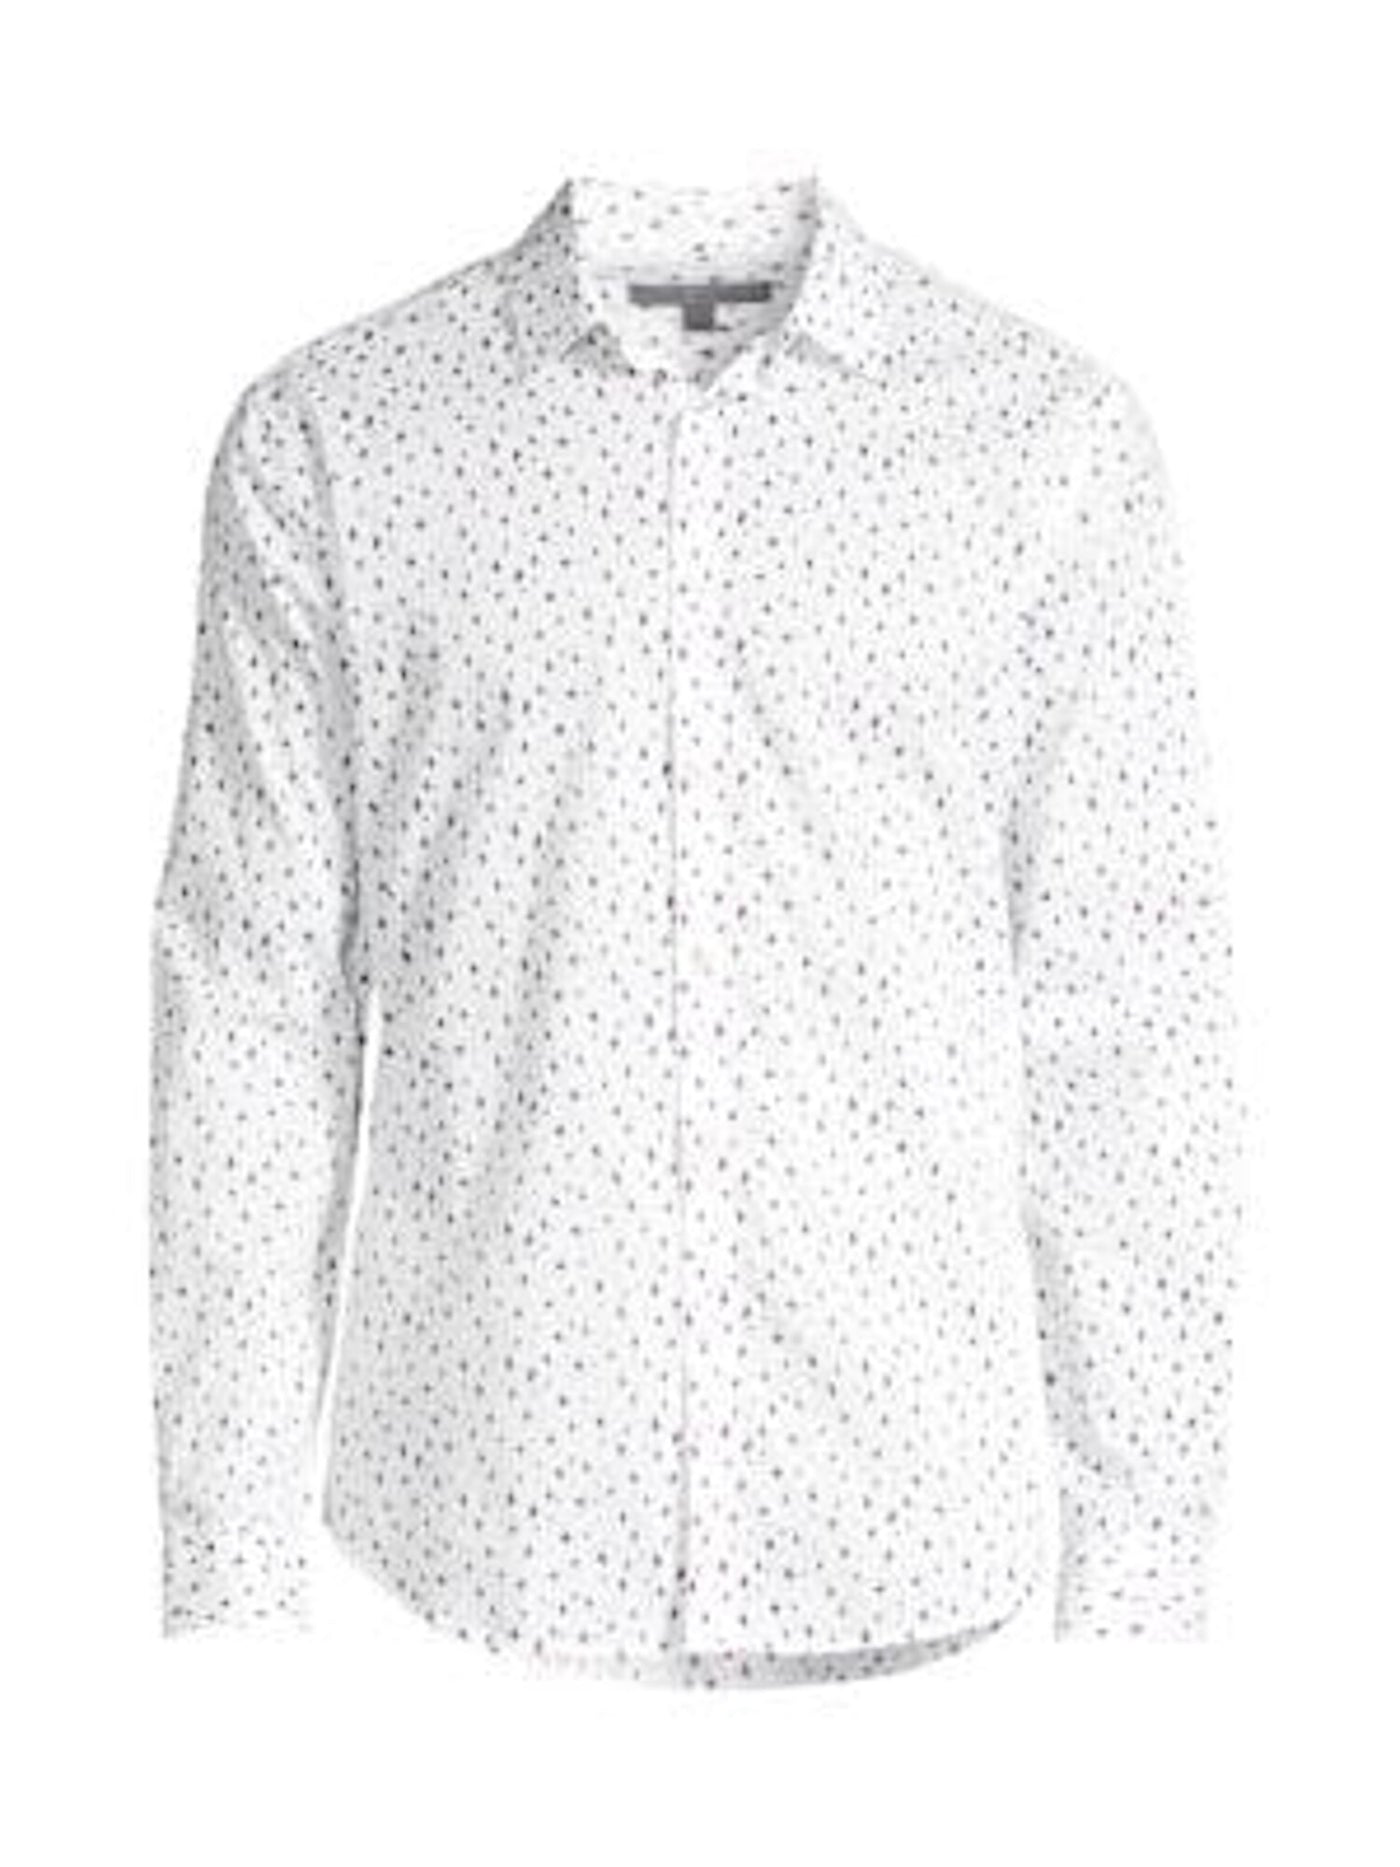 John Varvatos Mens White Printed Collared Classic Fit Shirt S